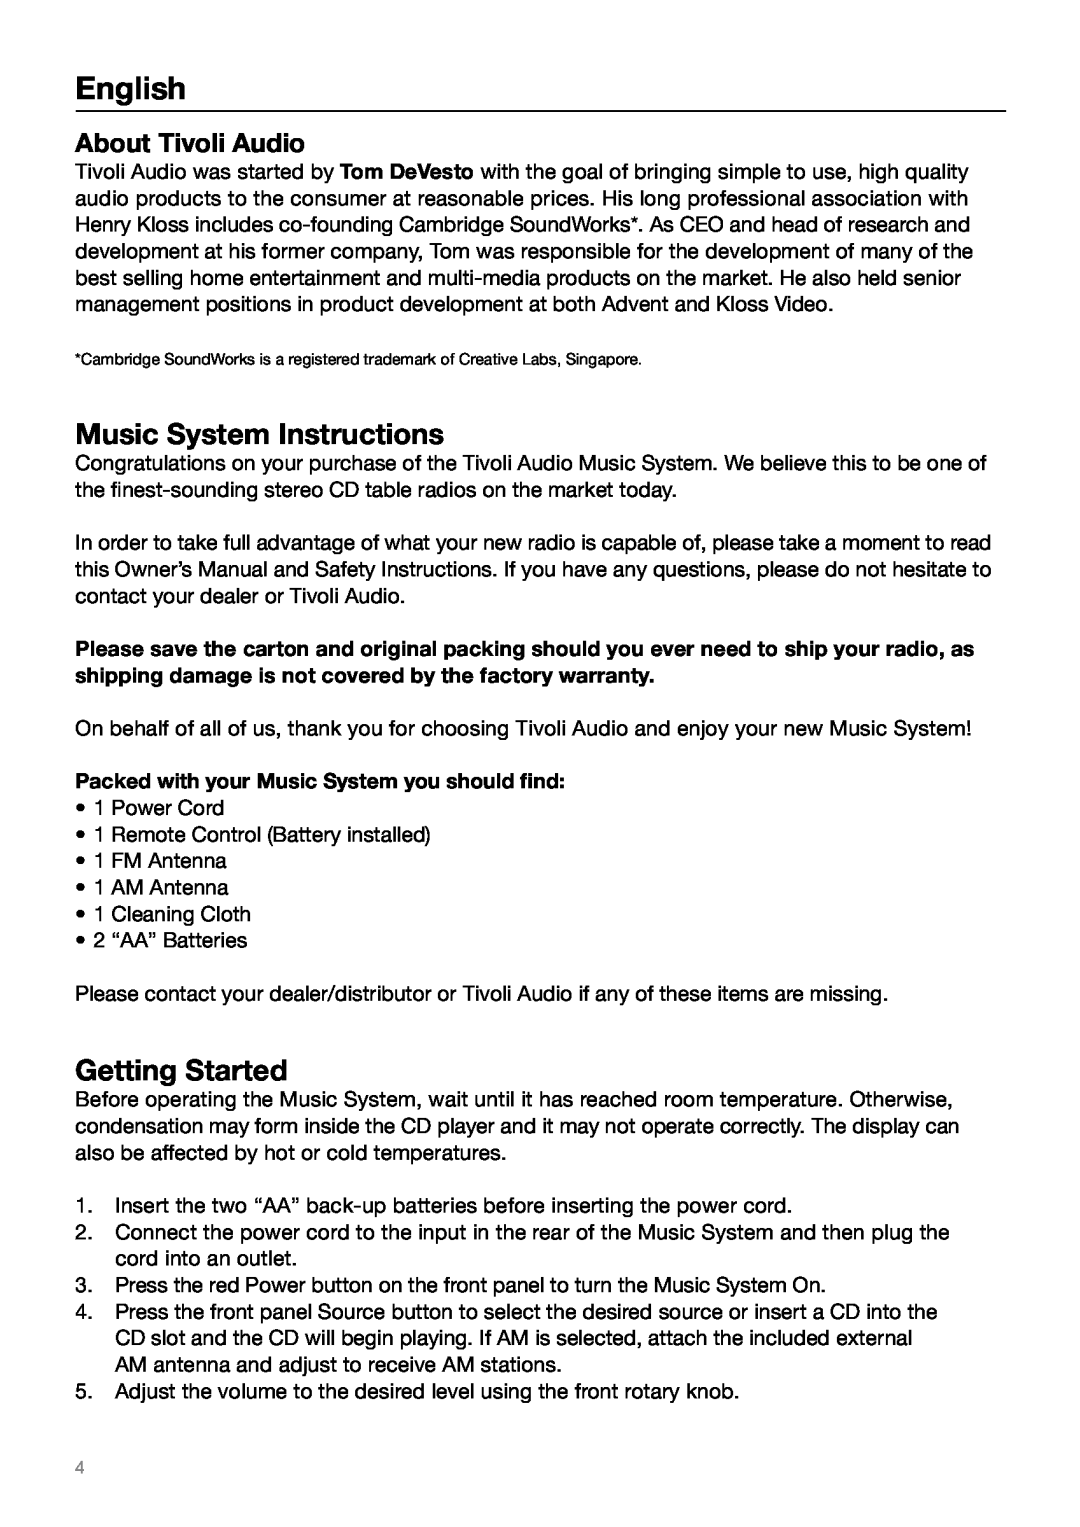 Tivoli Audio MUSIC SYSTEM owner manual English, Music System Instructions, Getting Started, About Tivoli Audio 